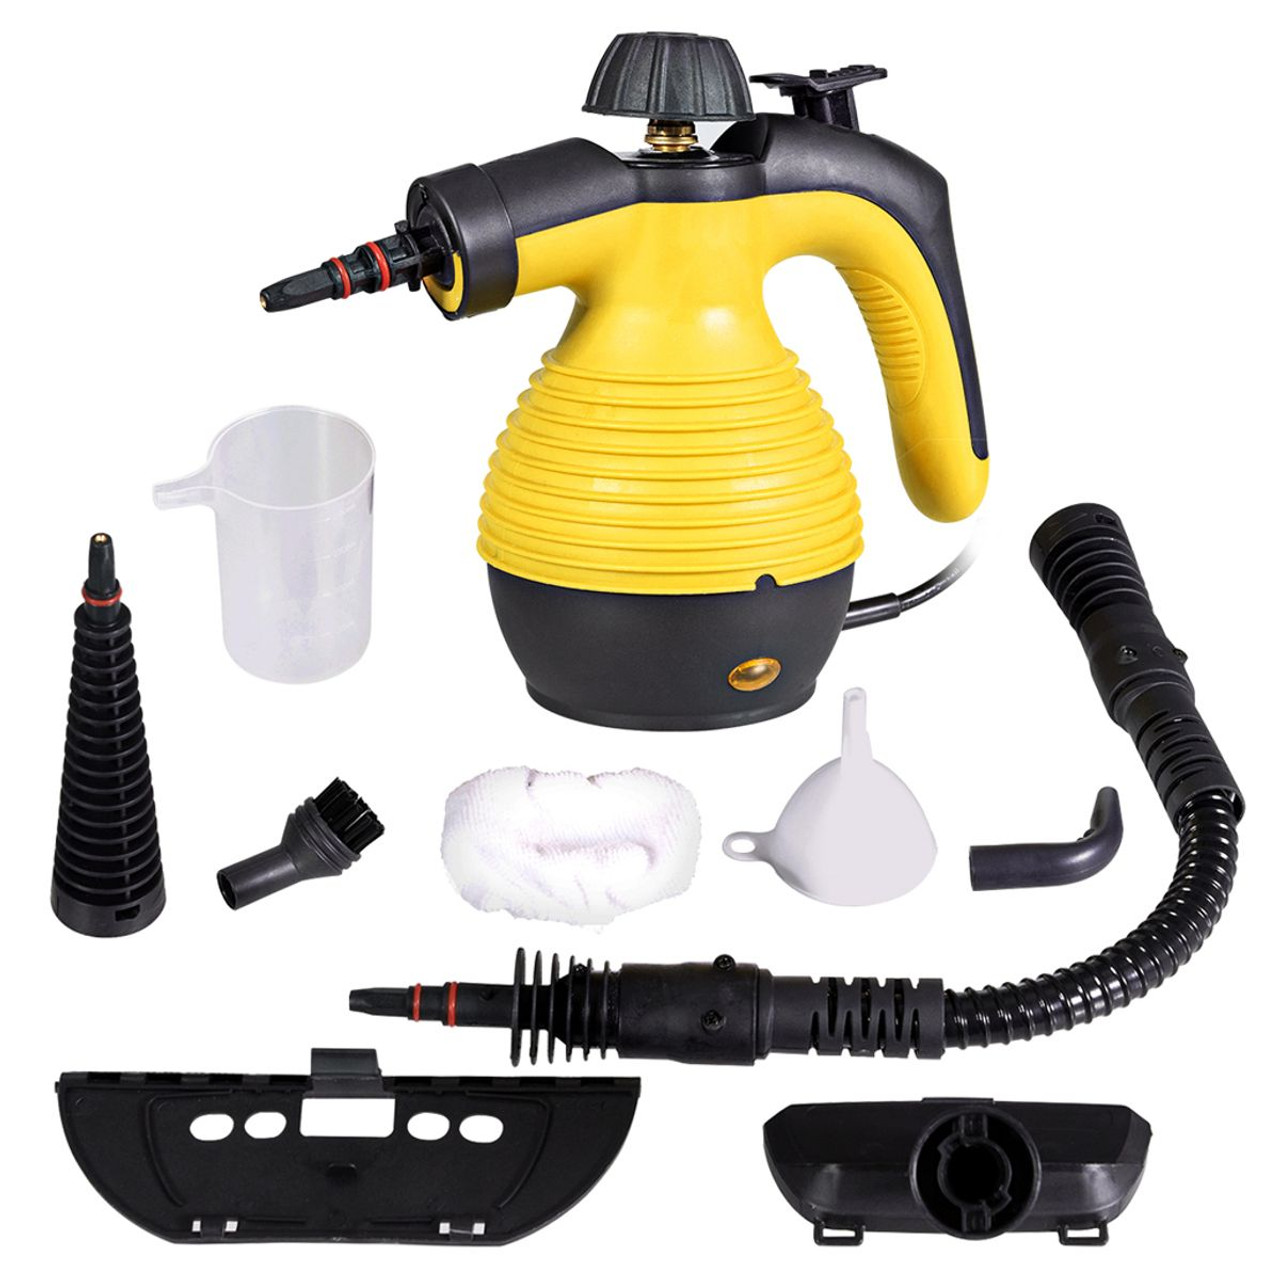 Multifunctional Portable 1,050-Watt Household Steam Cleaner product image